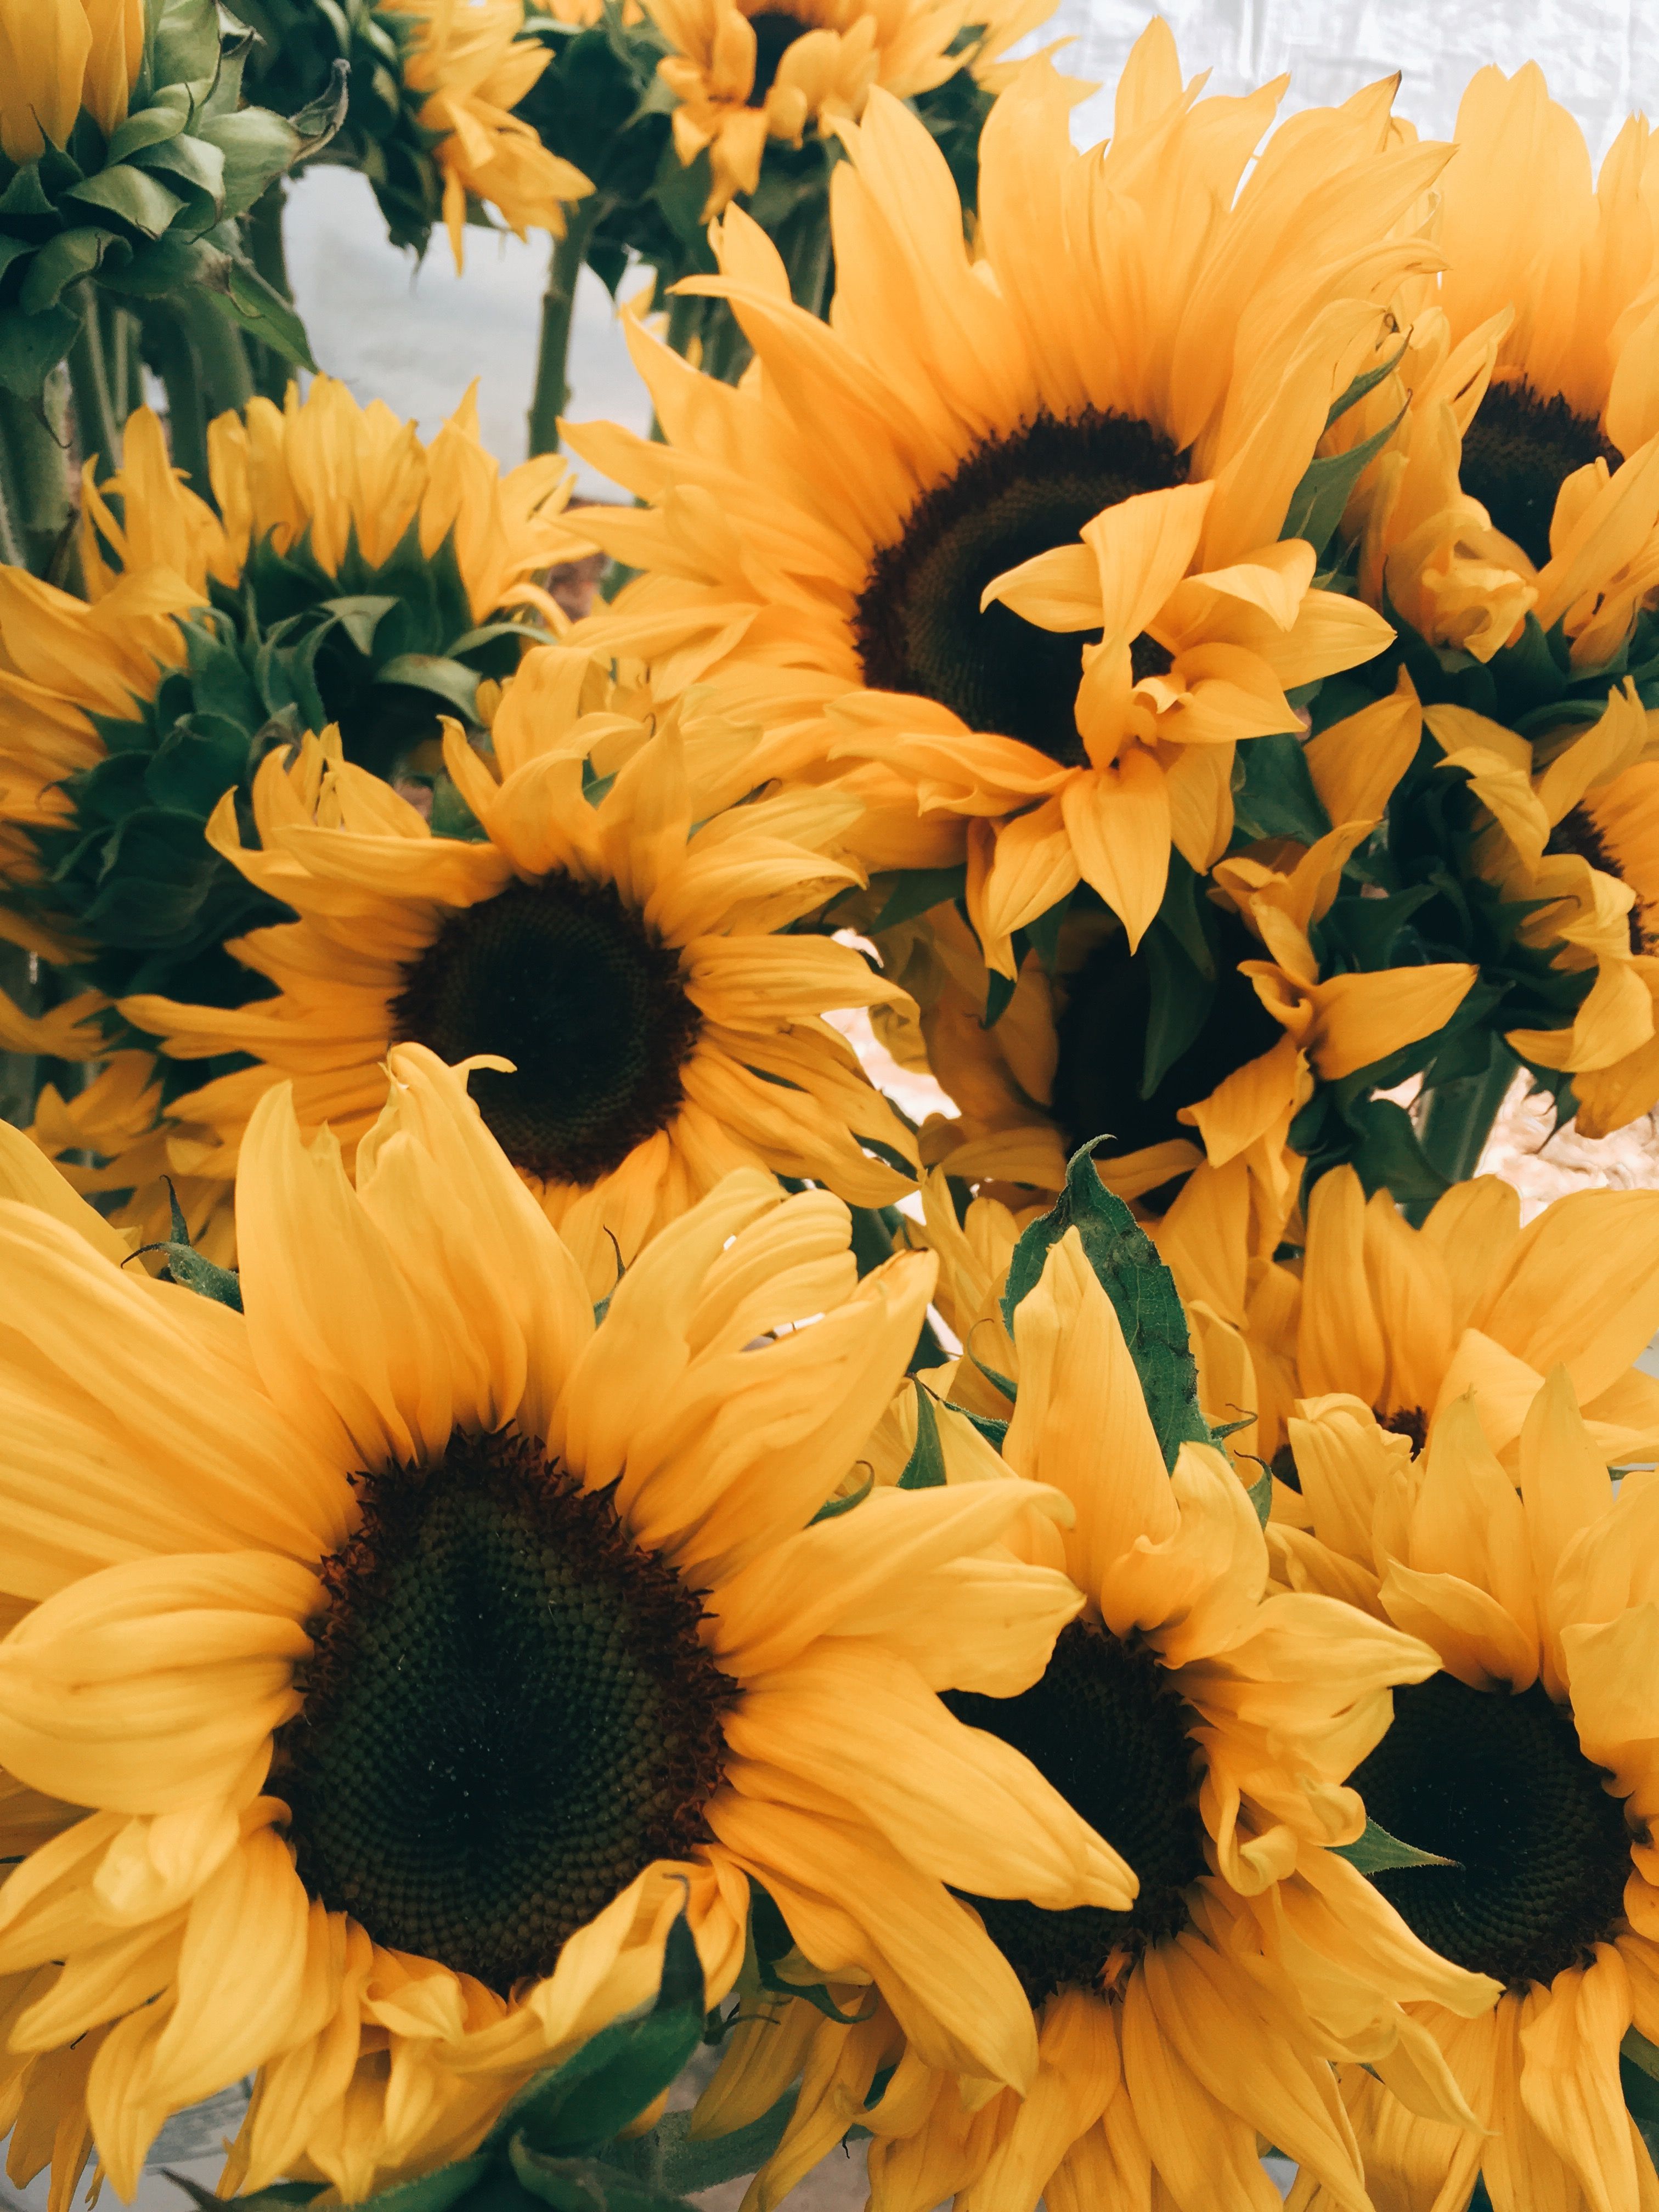 Photo creds: ʙᴀʏʟᴇᴇ ʙɪᴛᴛᴇʀ. Sunflower wallpaper, Sunflowers background, Sunflower picture